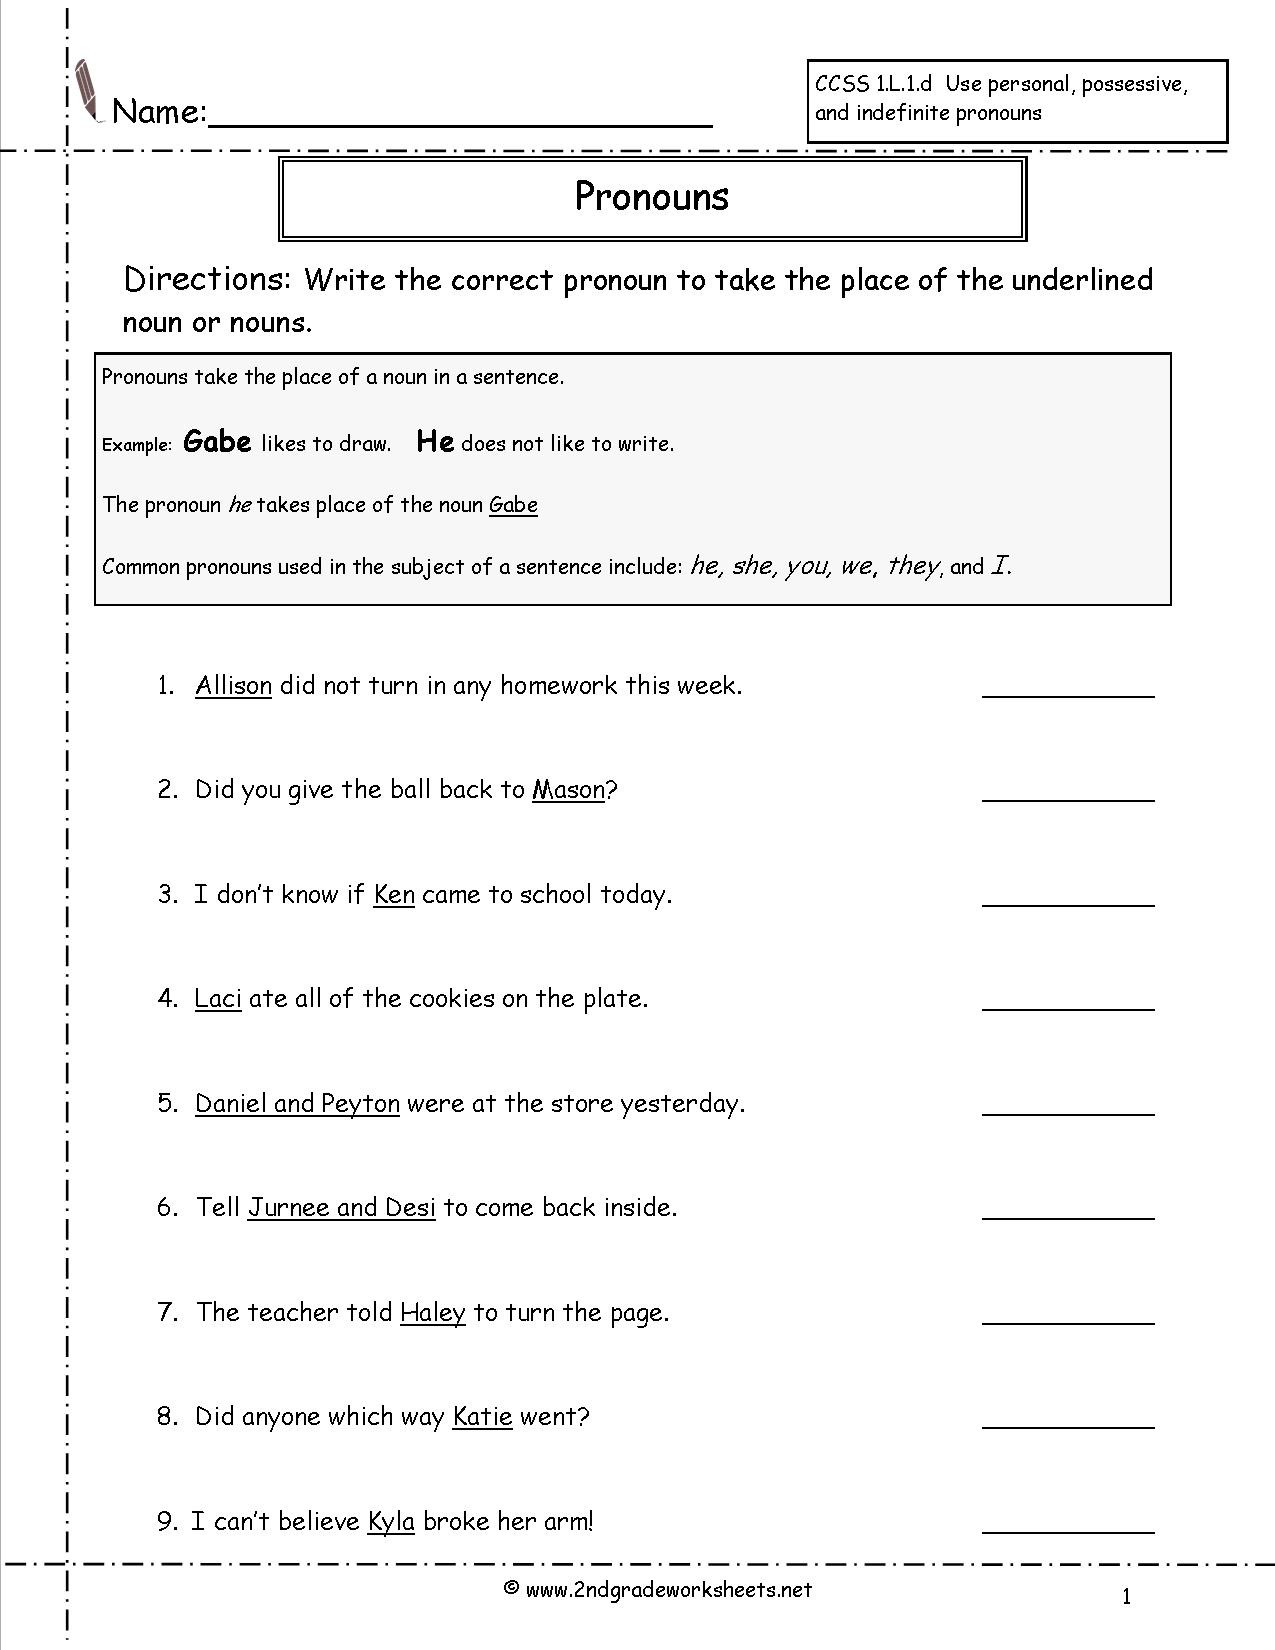 Pronoun Worksheets for 2nd Graders Free Pronoun Worksheet for 2nd Grade